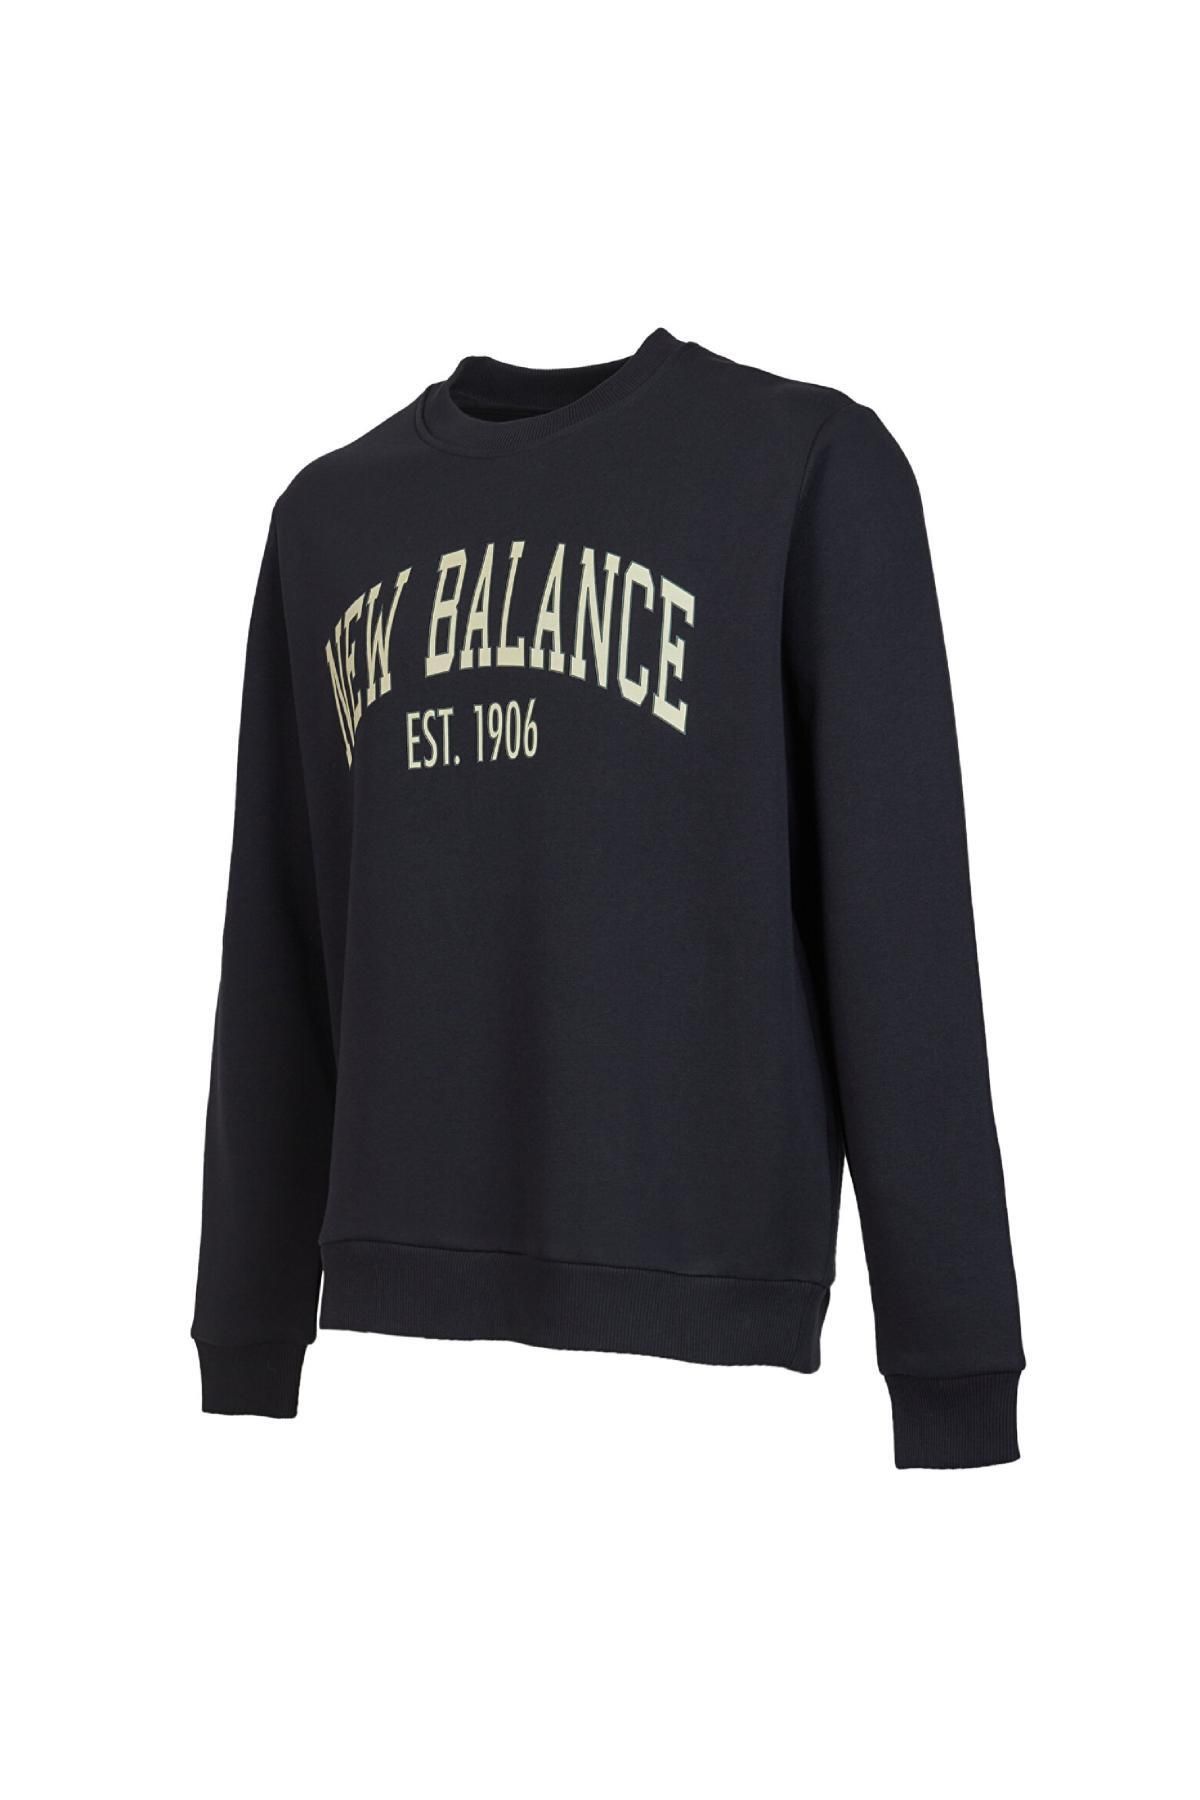 New Balance Mnc3325 Nb Lifestyle Men Sweat Lacivert Erkek Sweatshirt